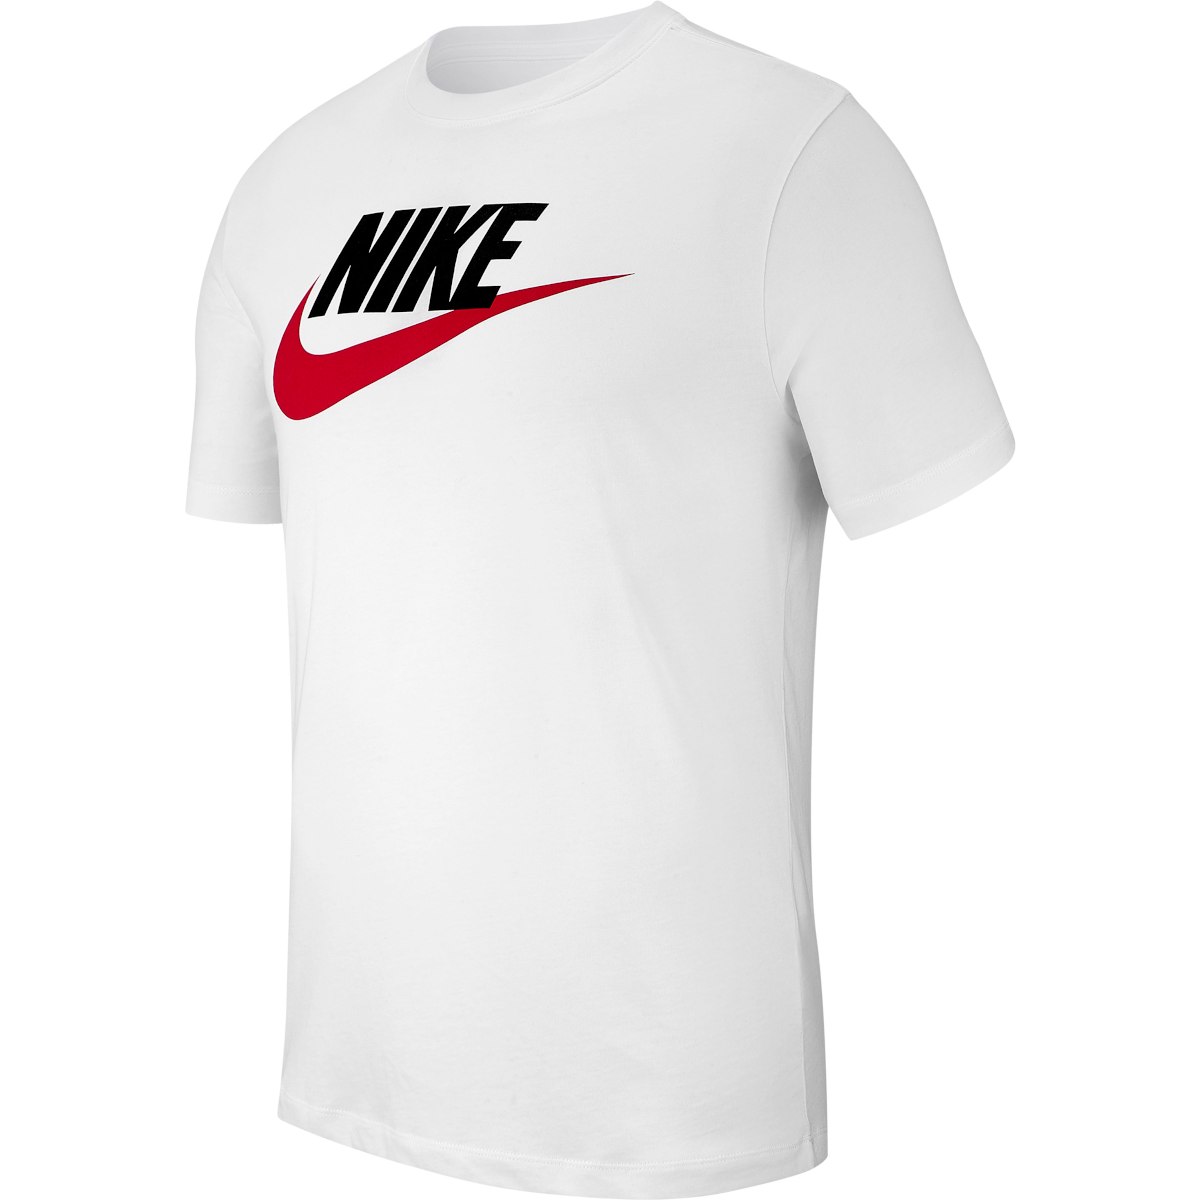 Productfoto van Nike Sportswear Icon Futura T-Shirt Heren - white/black/university red AR5004-100